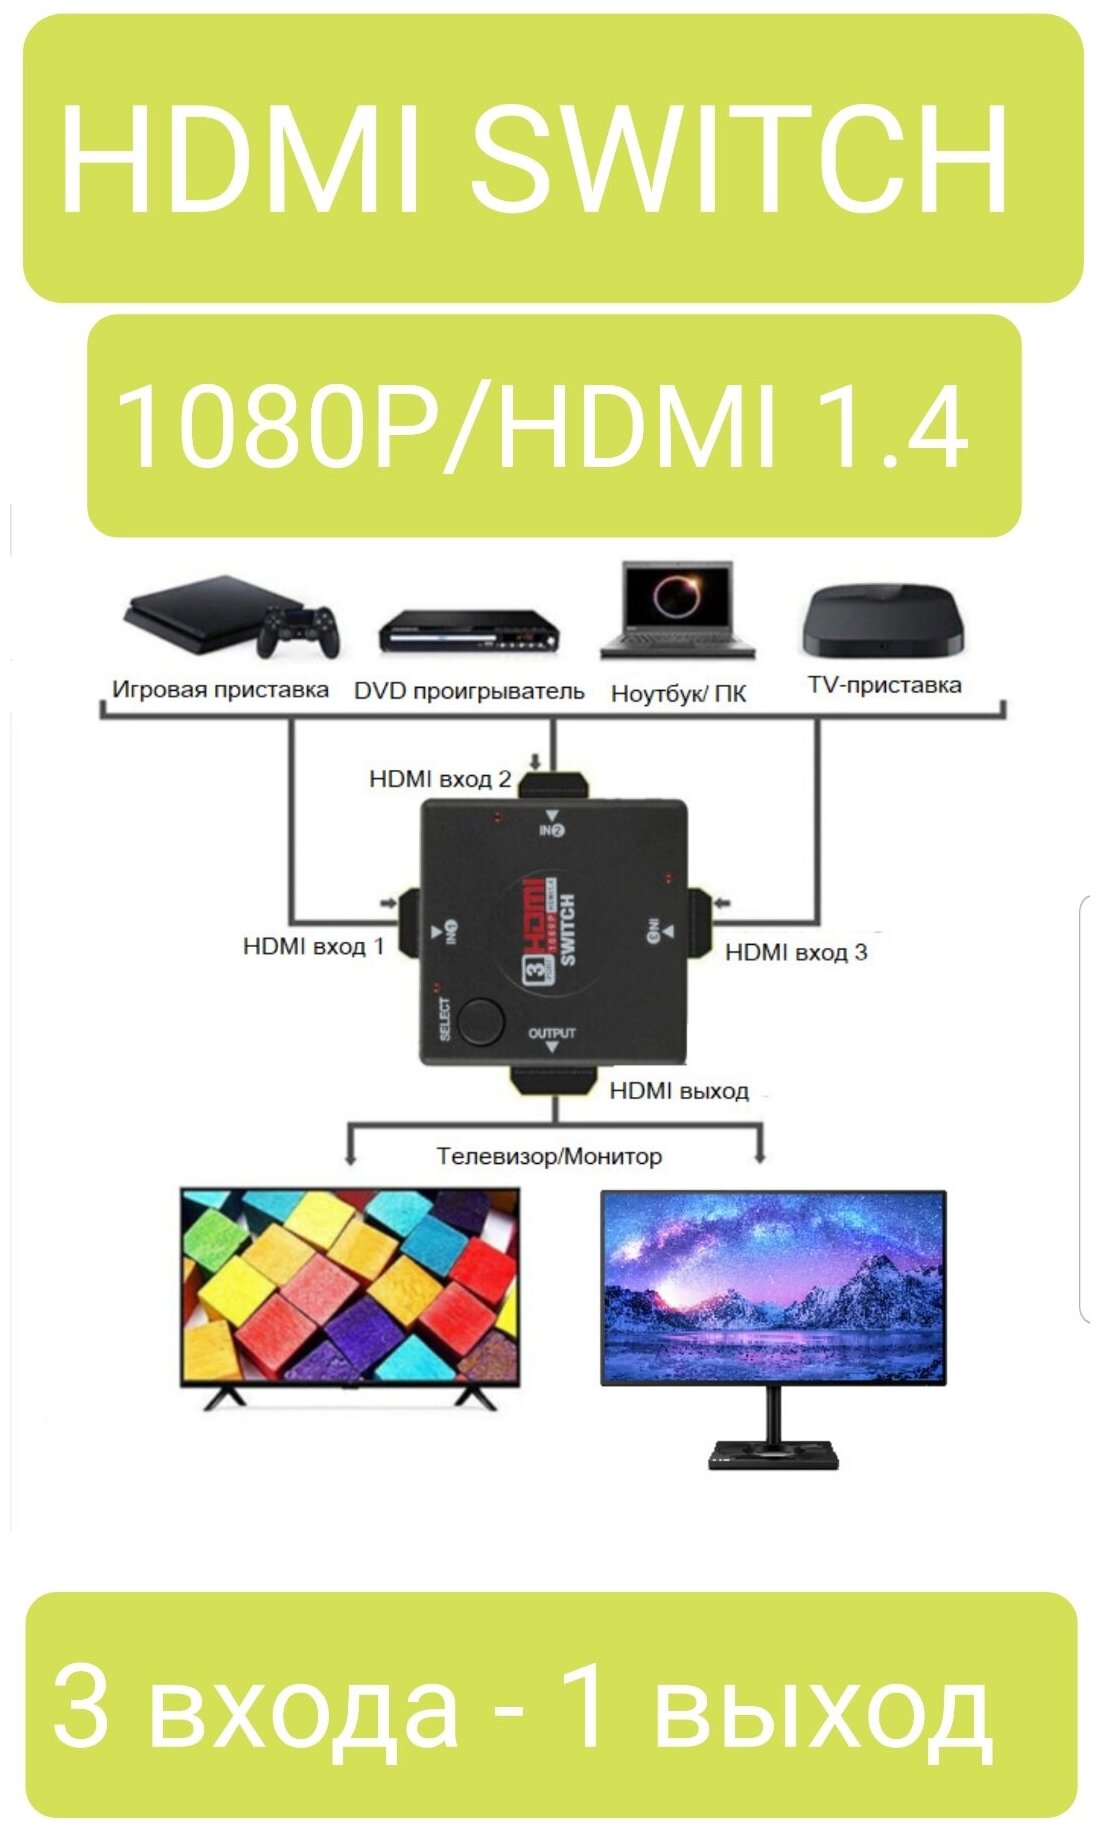 HDMI Switch 1.4 - Переключатель